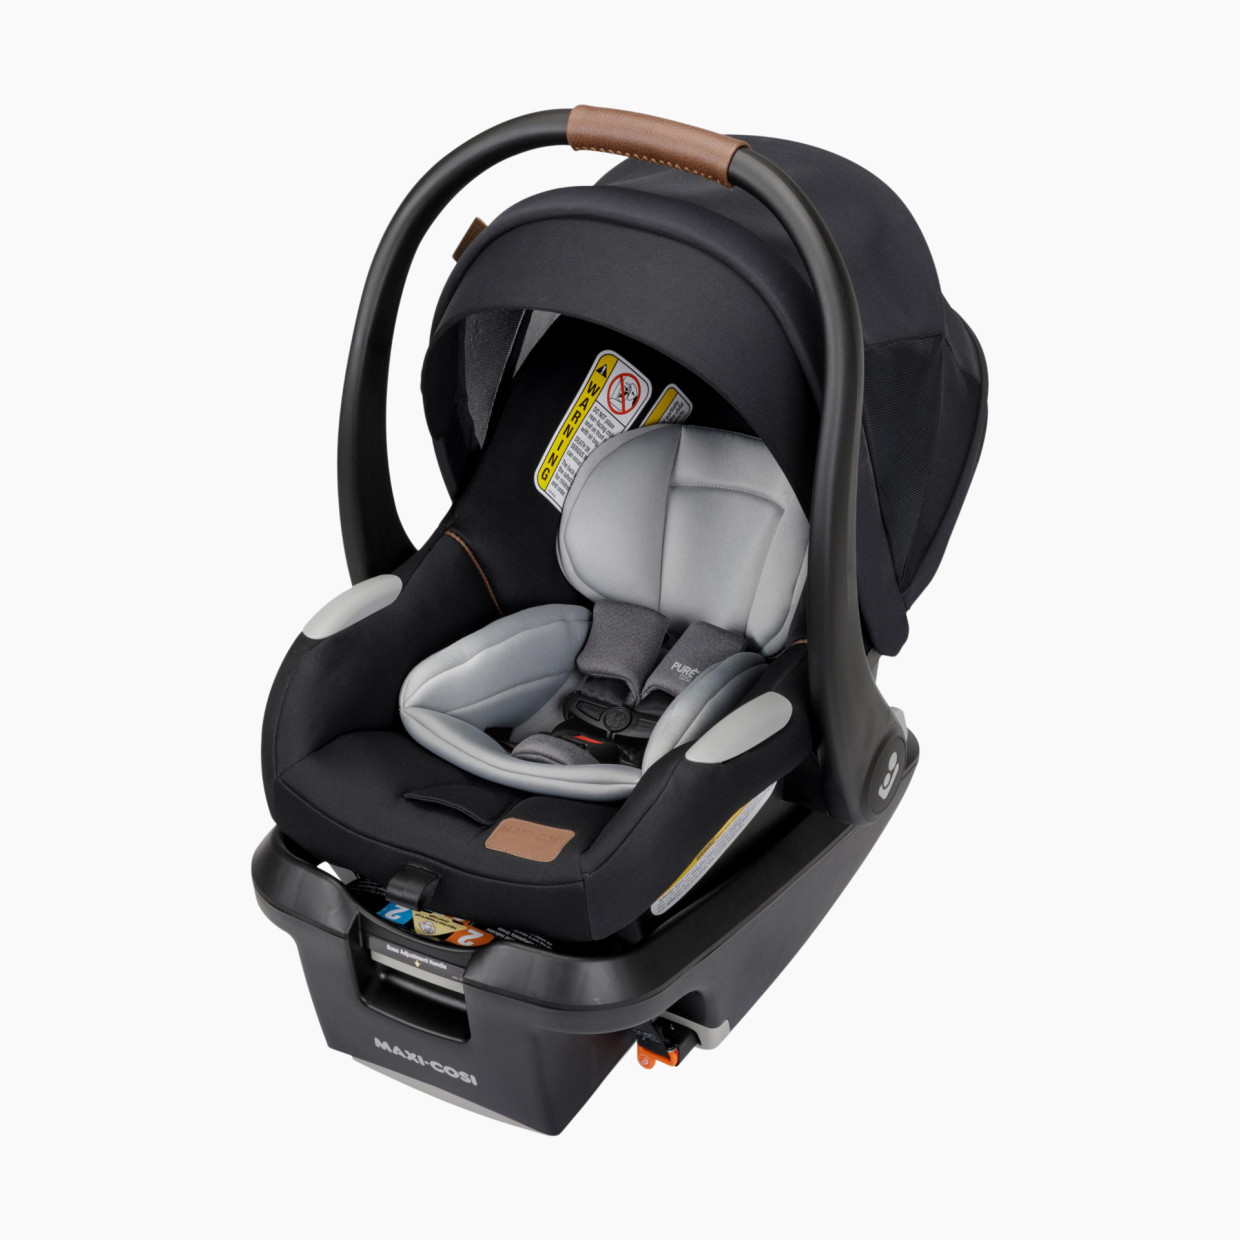 Maxi-Cosi Mico Luxe+ Infant Car Seat - Essential Black.